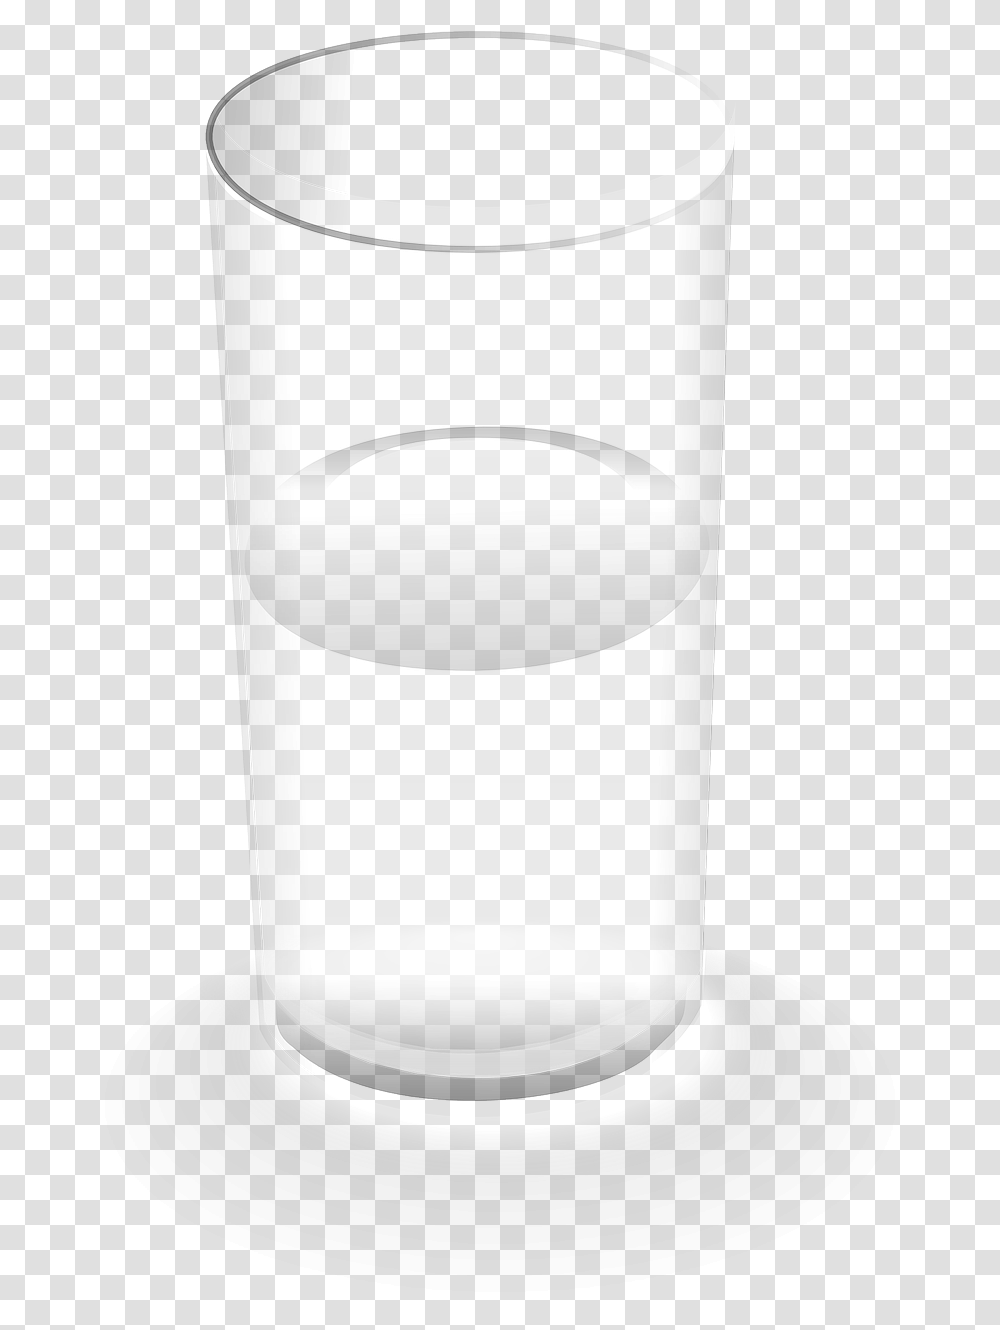 Watercupbeveragesdrinkingdrink Free Image From Needpixcom Drink, Lamp, Bottle, Milk, Cylinder Transparent Png